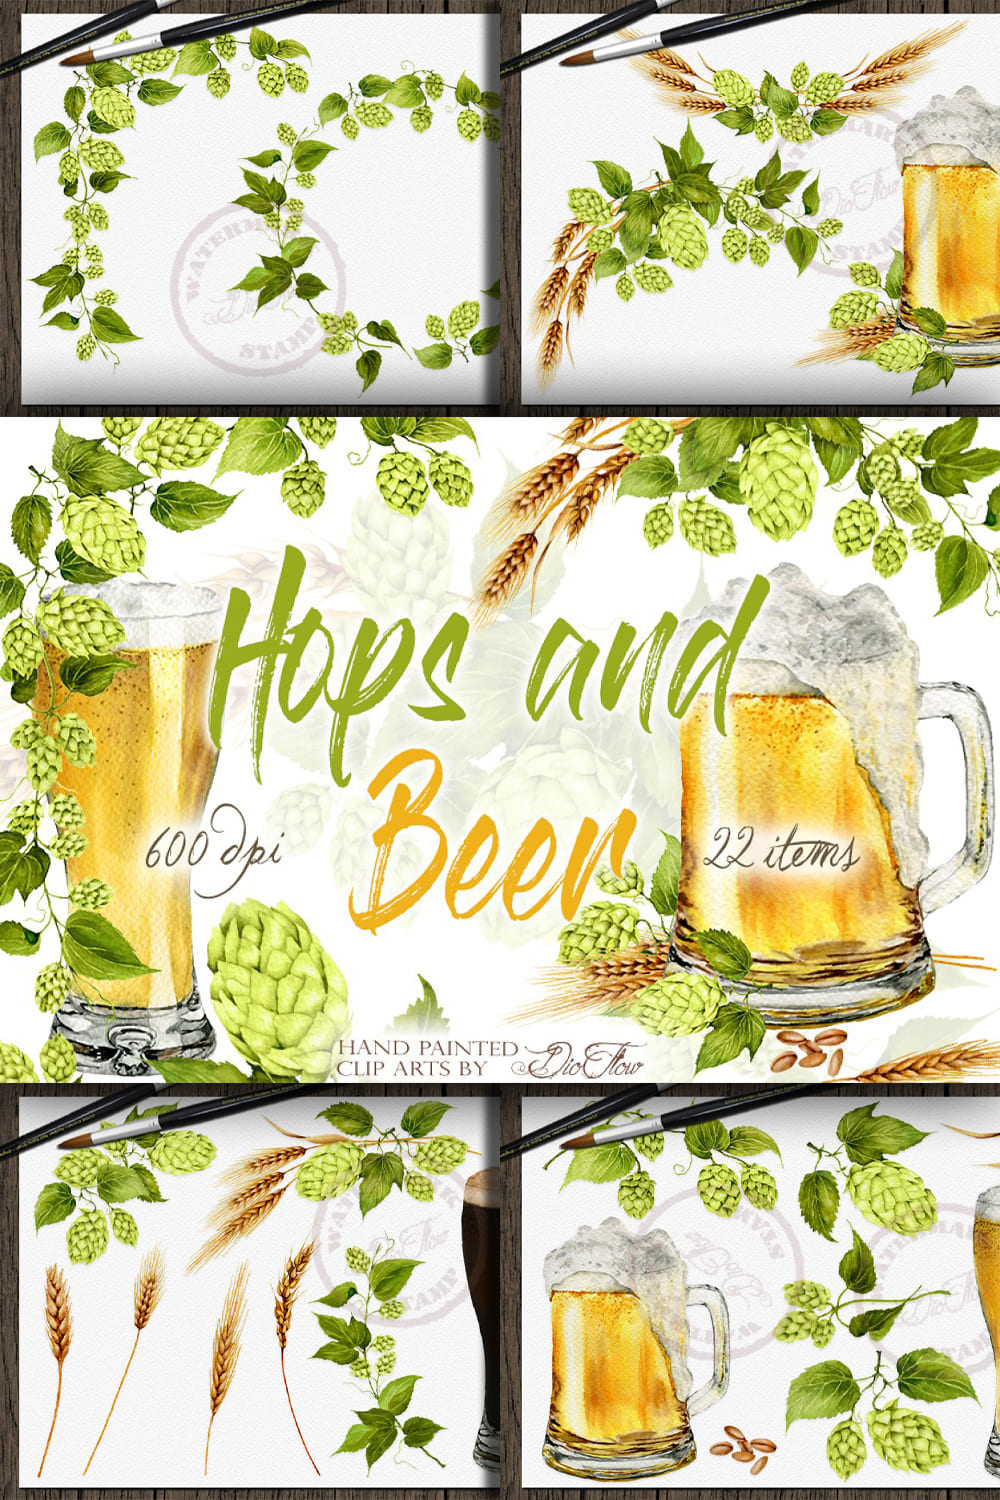 2923306 hops and beer watercolor clip art pinterest 1000 1500